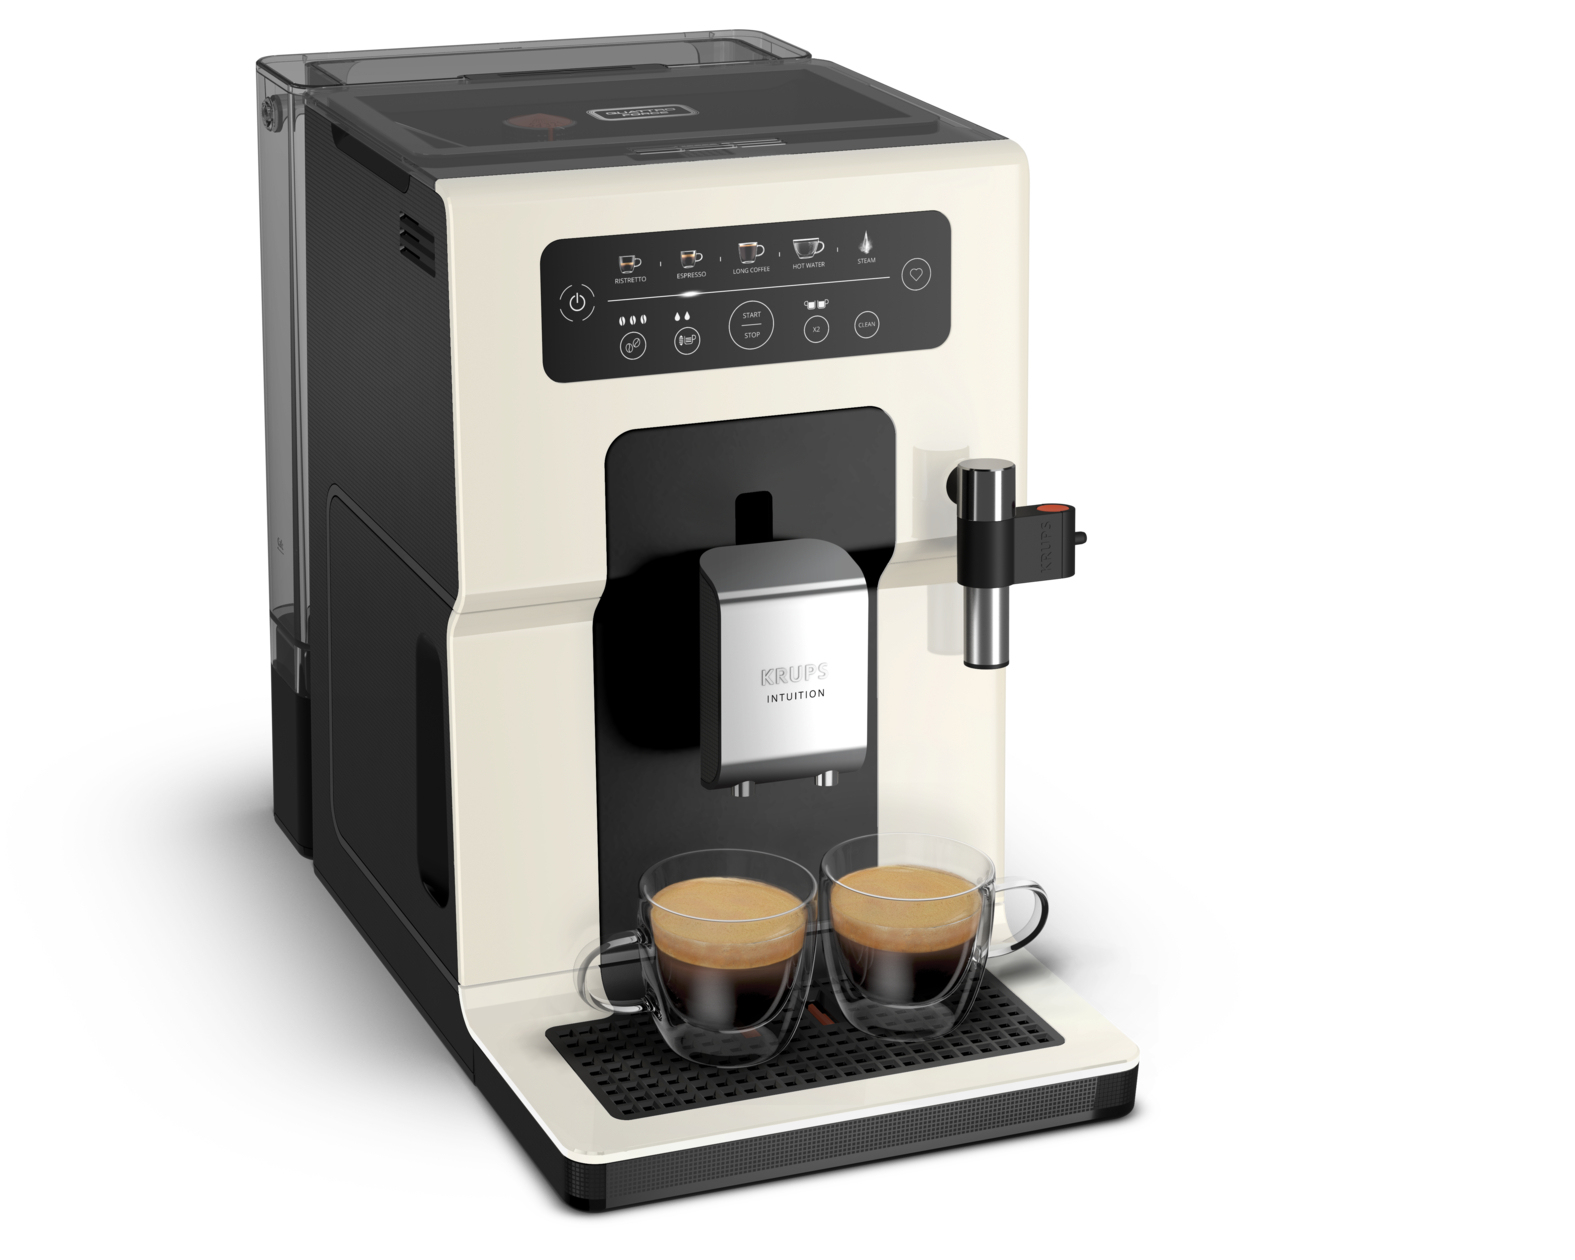 Krups Intuition Latt'Essential EA871A coffee maker